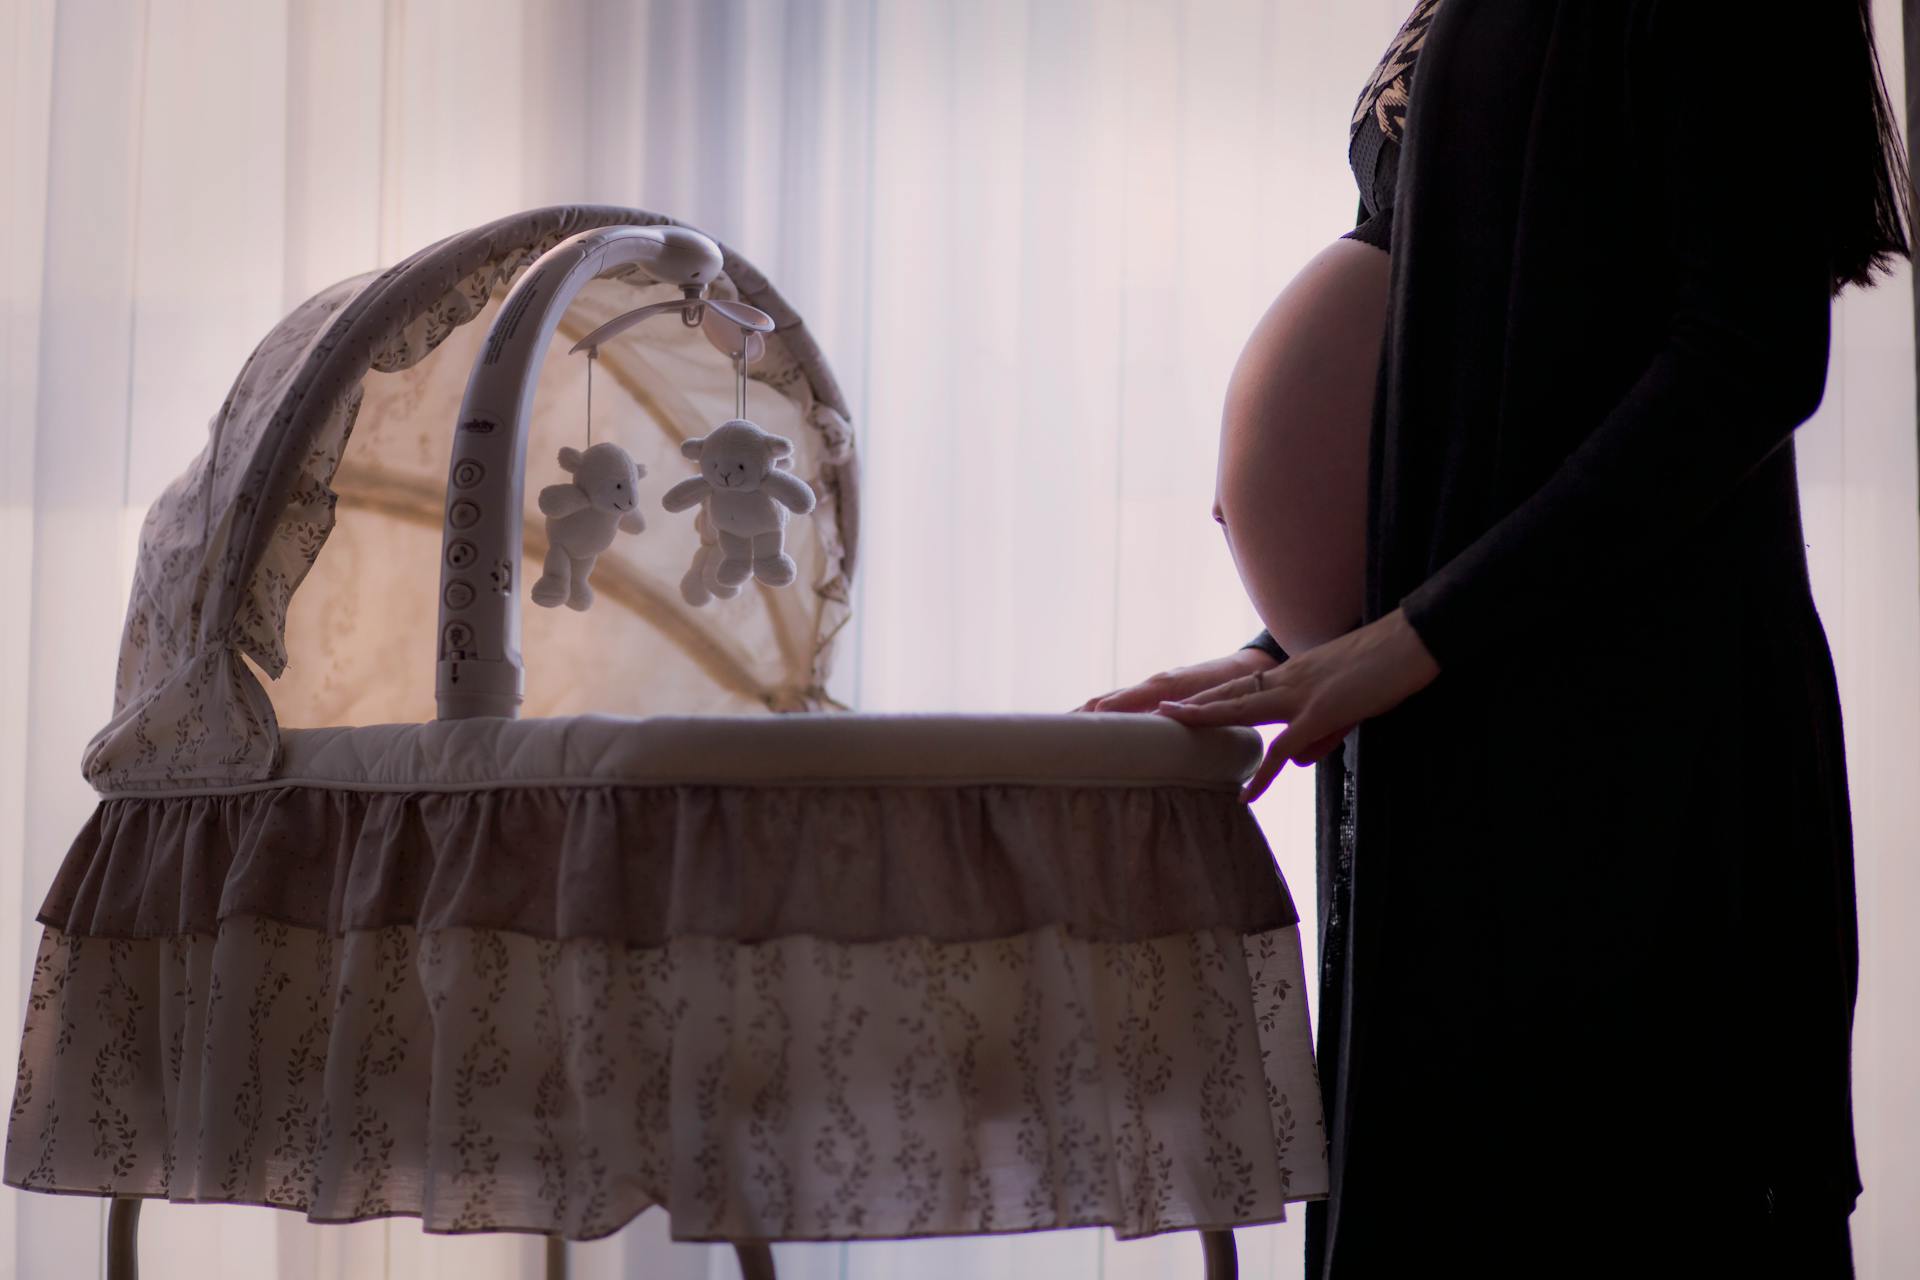 A pregnant woman standing near a bassinet | Source: Pexels